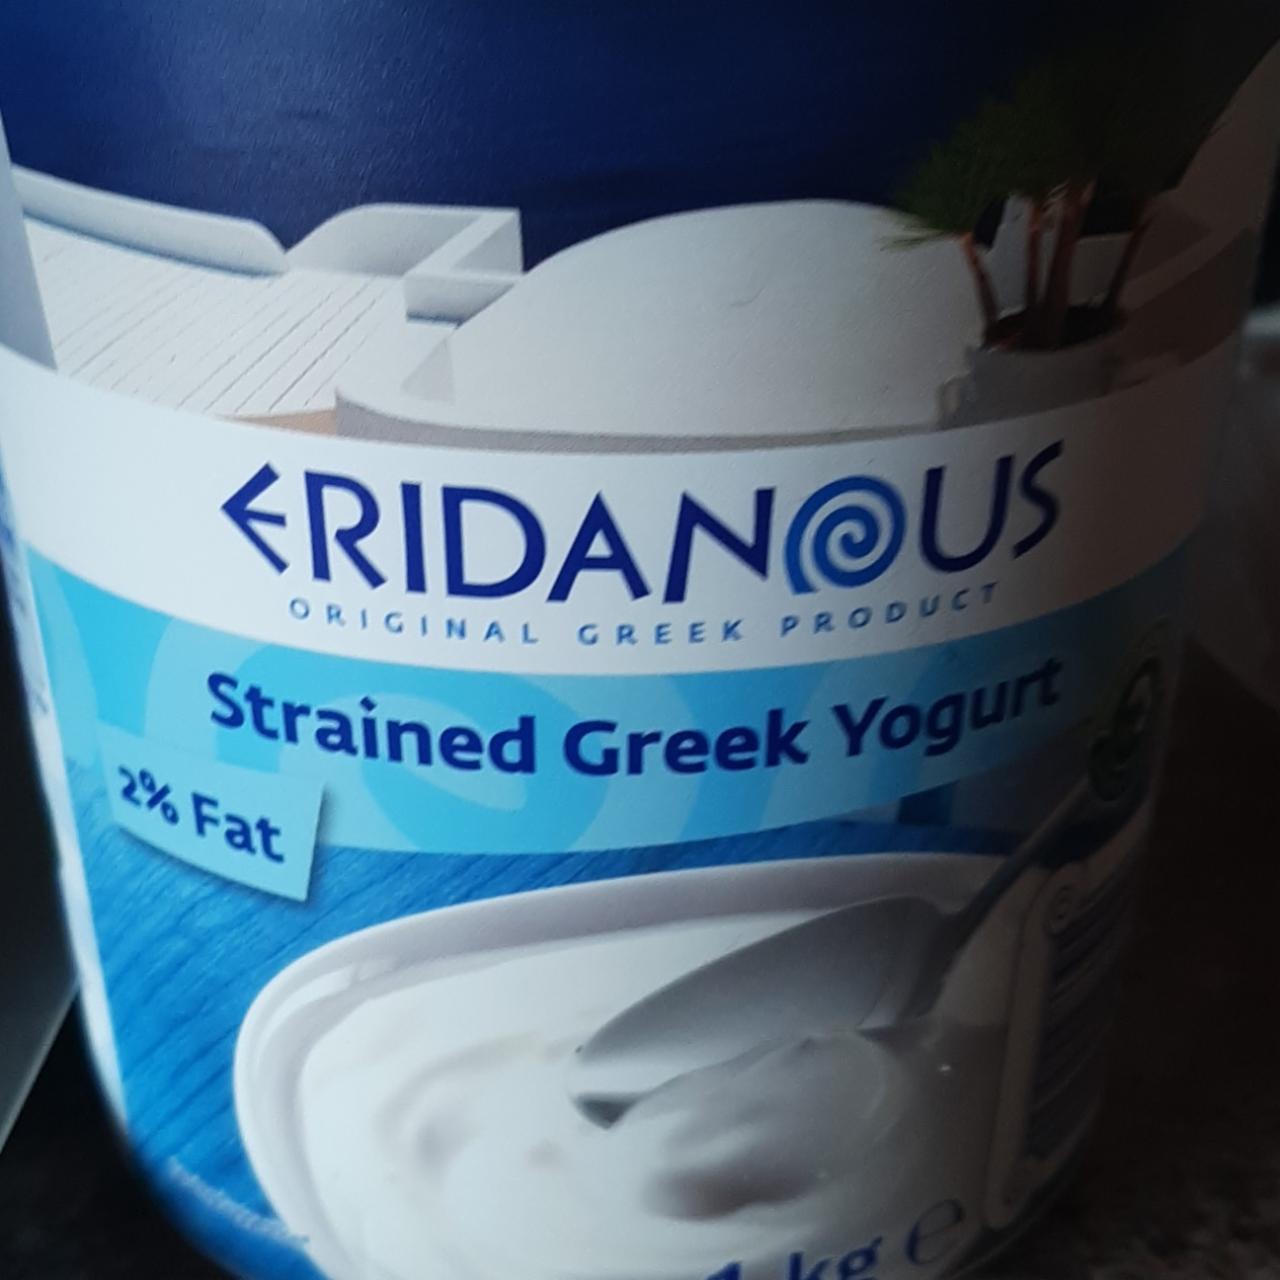 Fotografie - Strained Greek Yogurt 2% Fat Eridanous